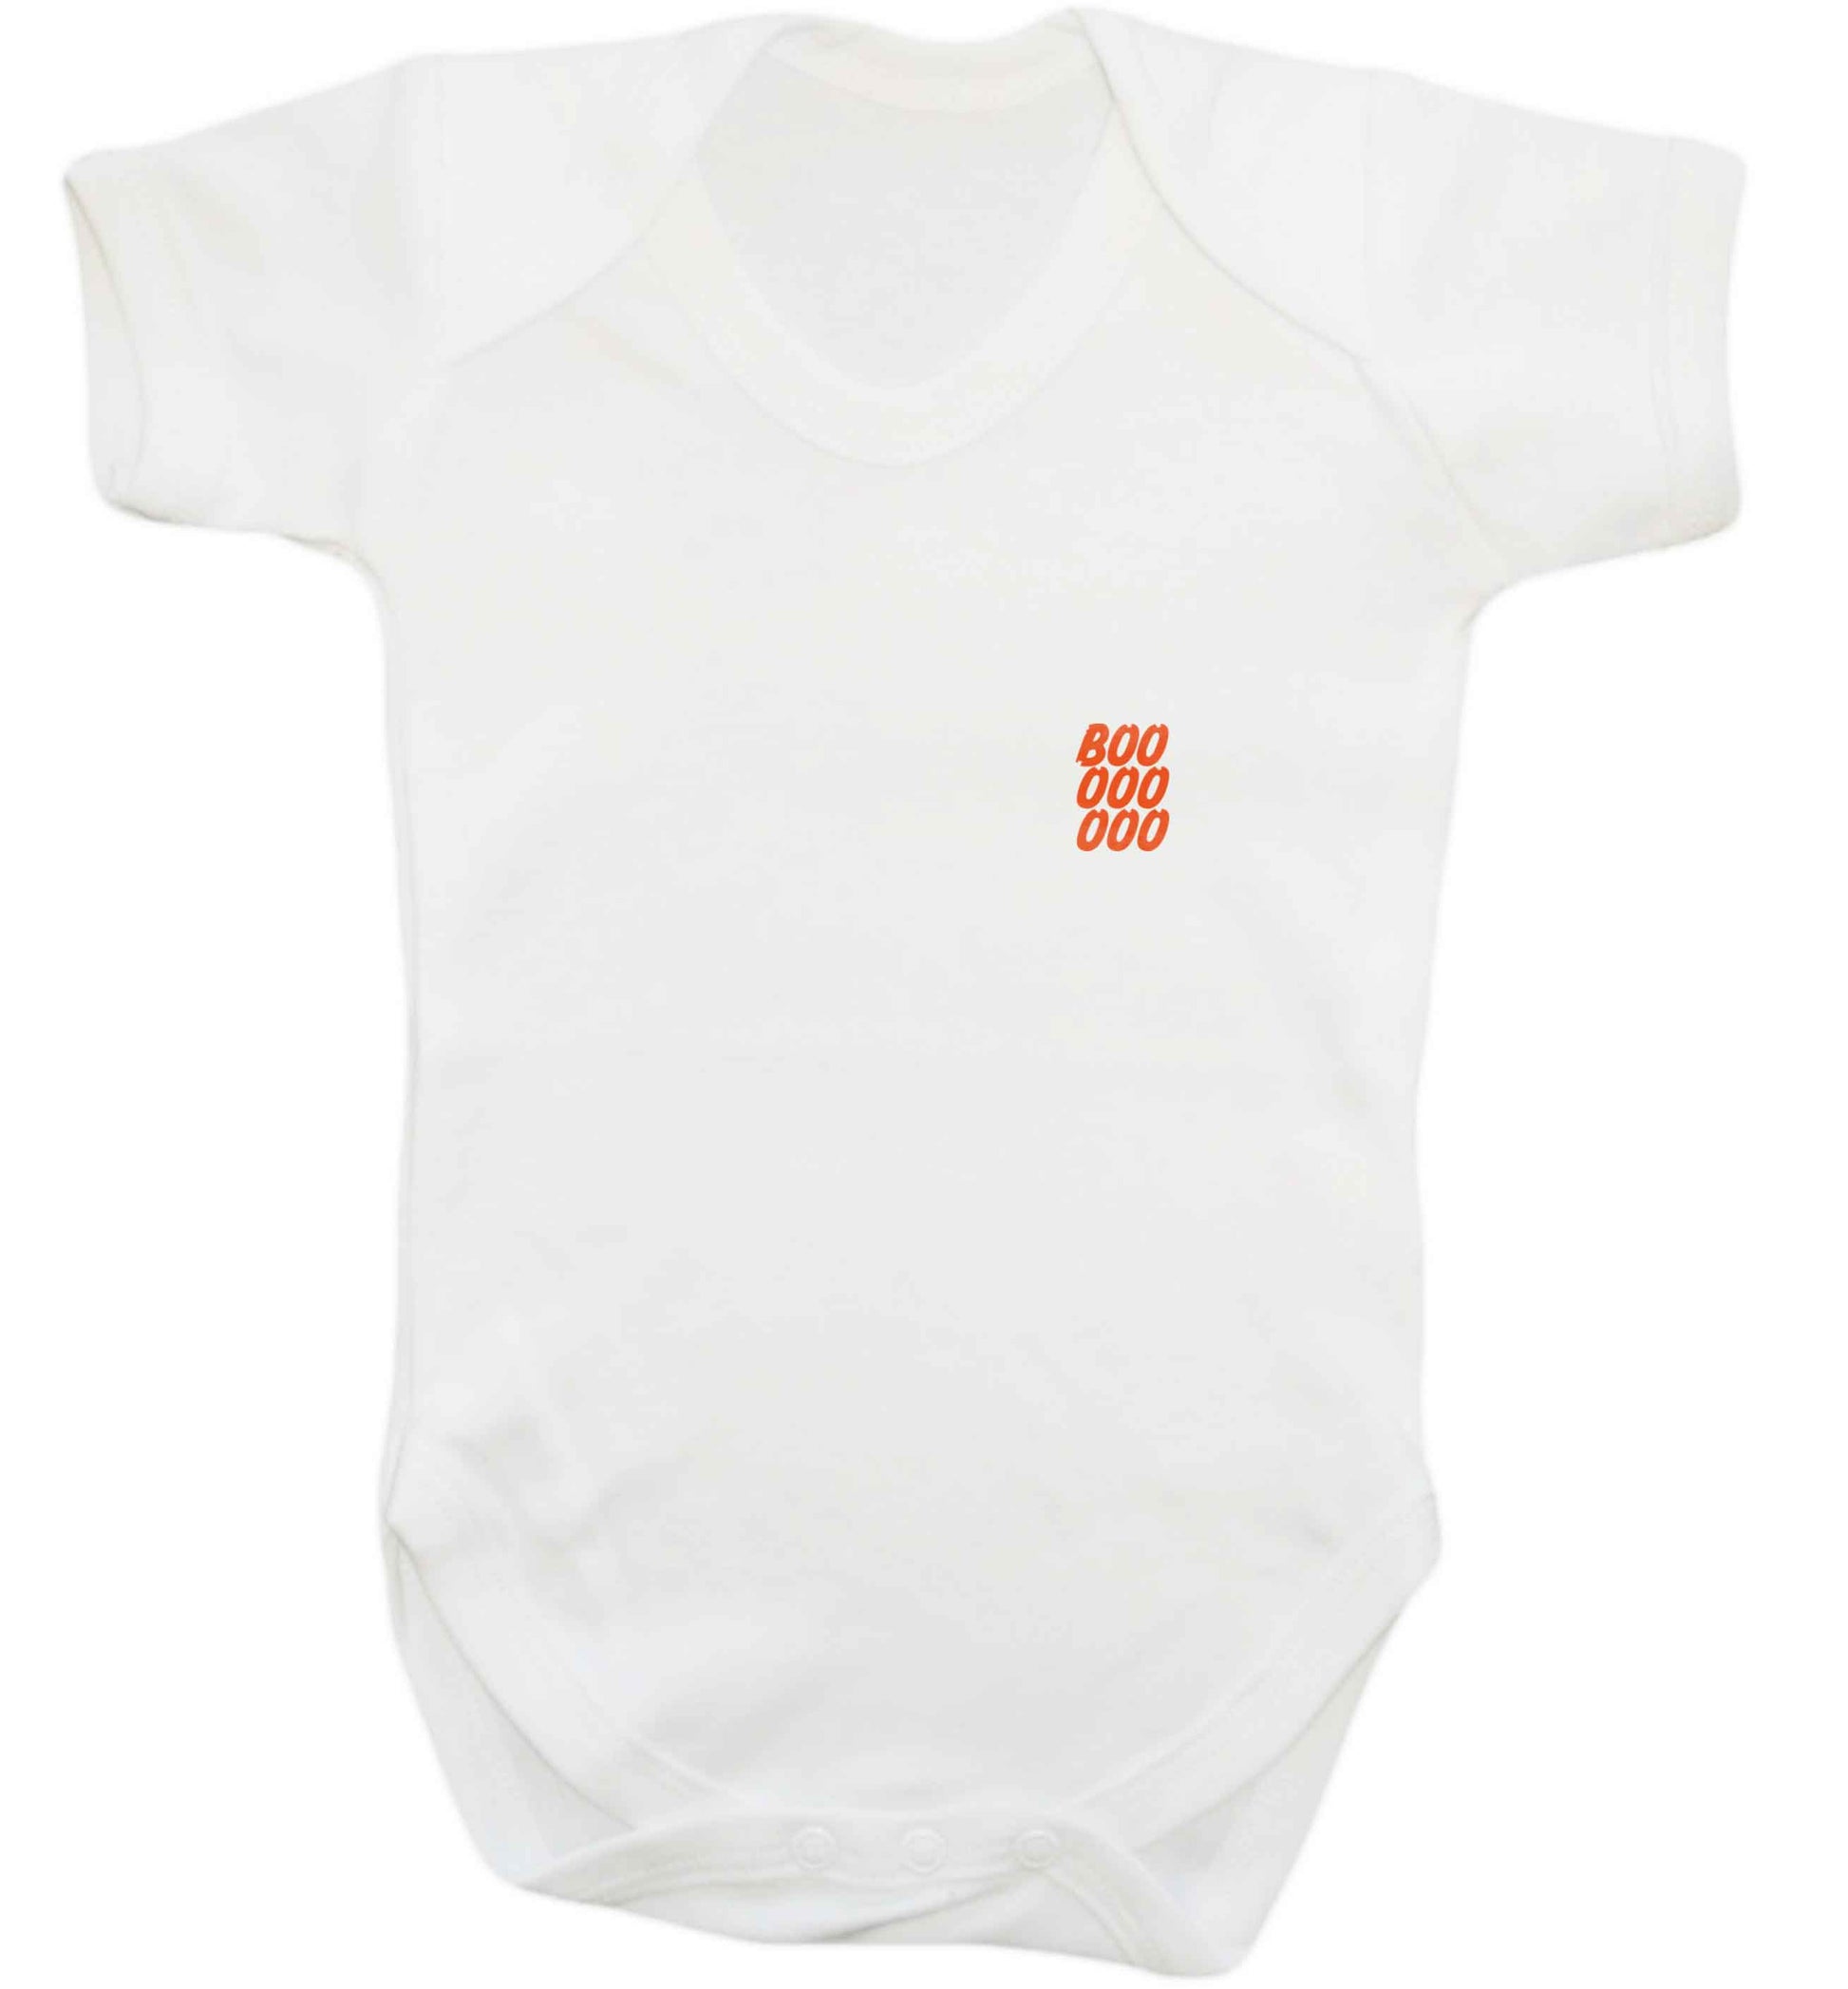 Boo pocket baby vest white 18-24 months